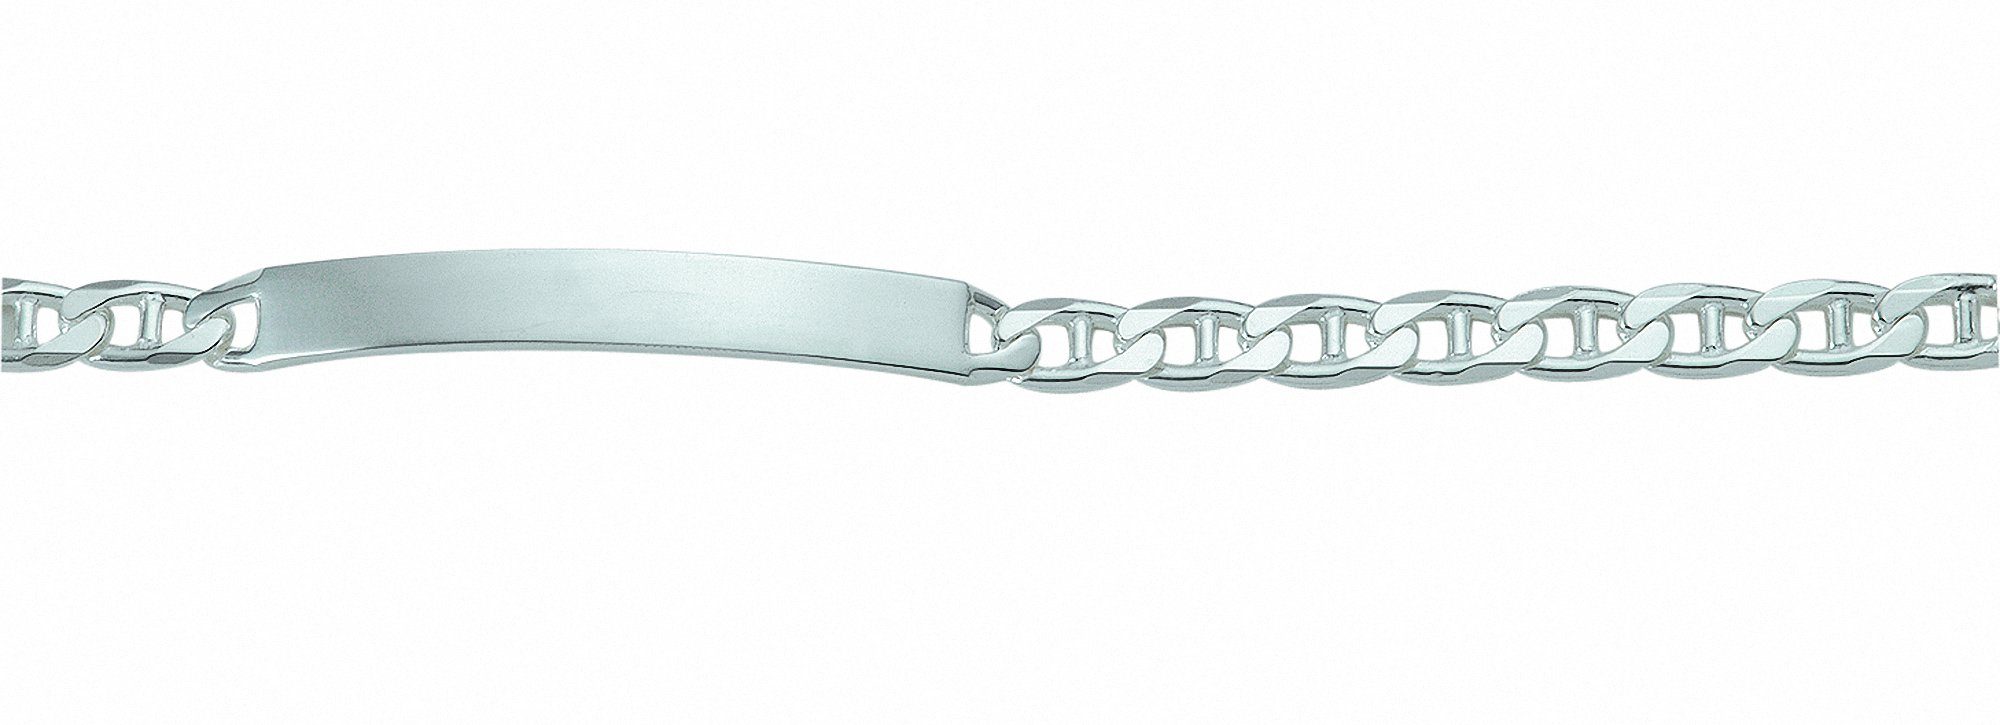 Damen Schmuck Adelia´s Silberarmband 925 Silber Stegpanzer Armband 21 cm, 925 Sterling Silber Stegpanzerkette Silberschmuck für 